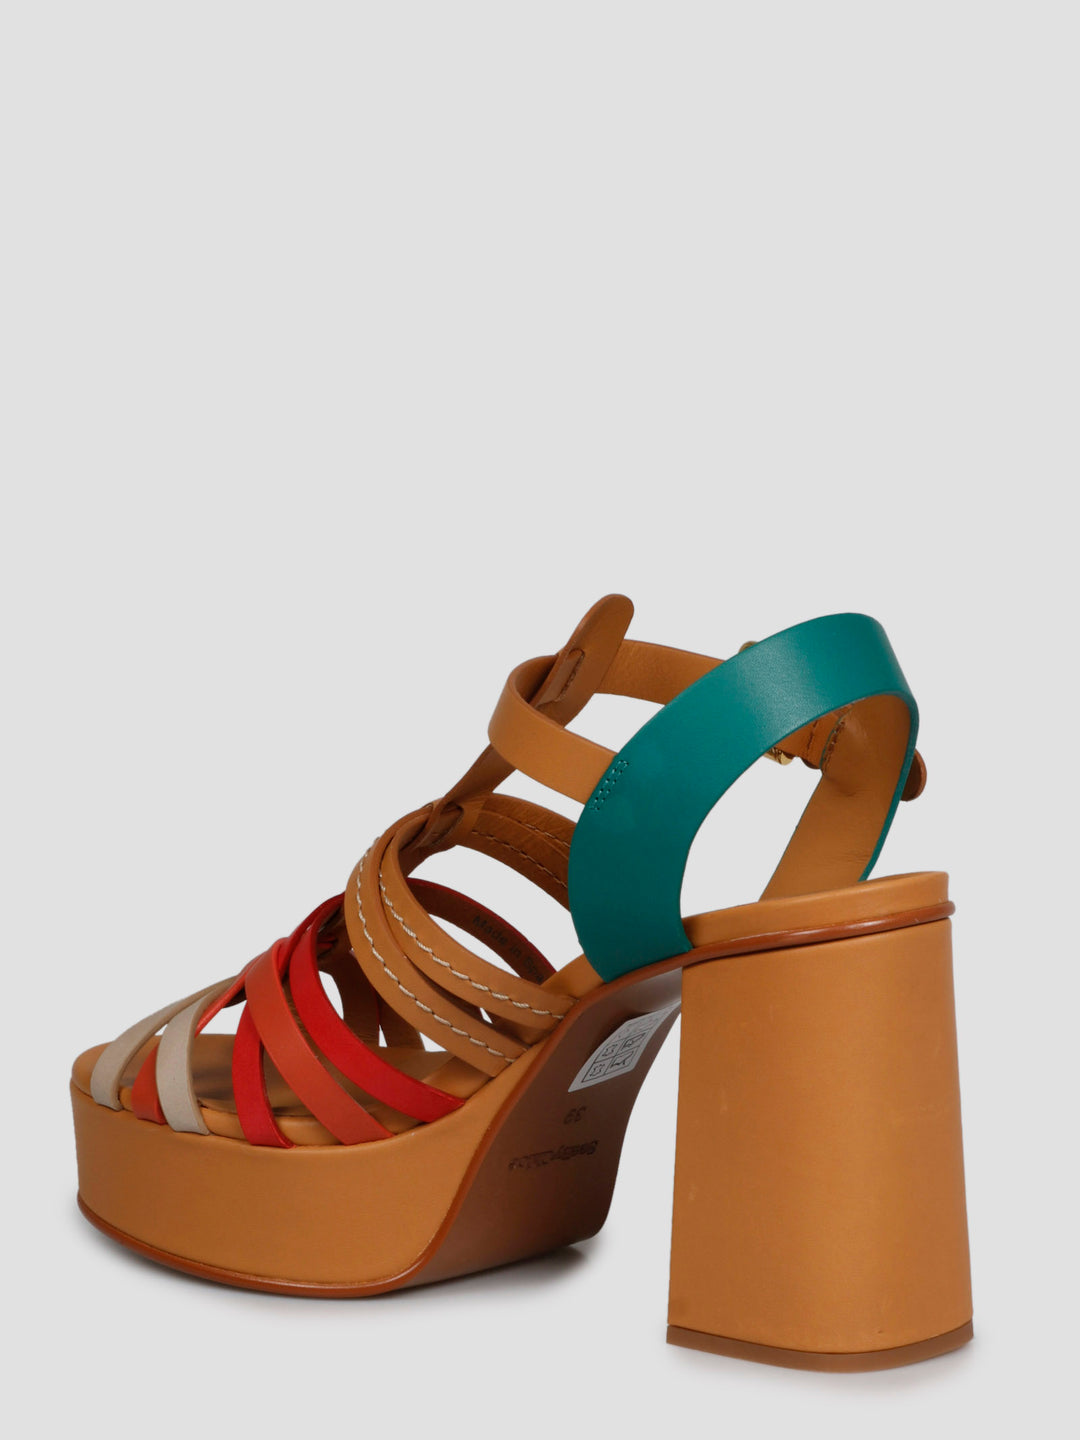 Sierra heeled sandals